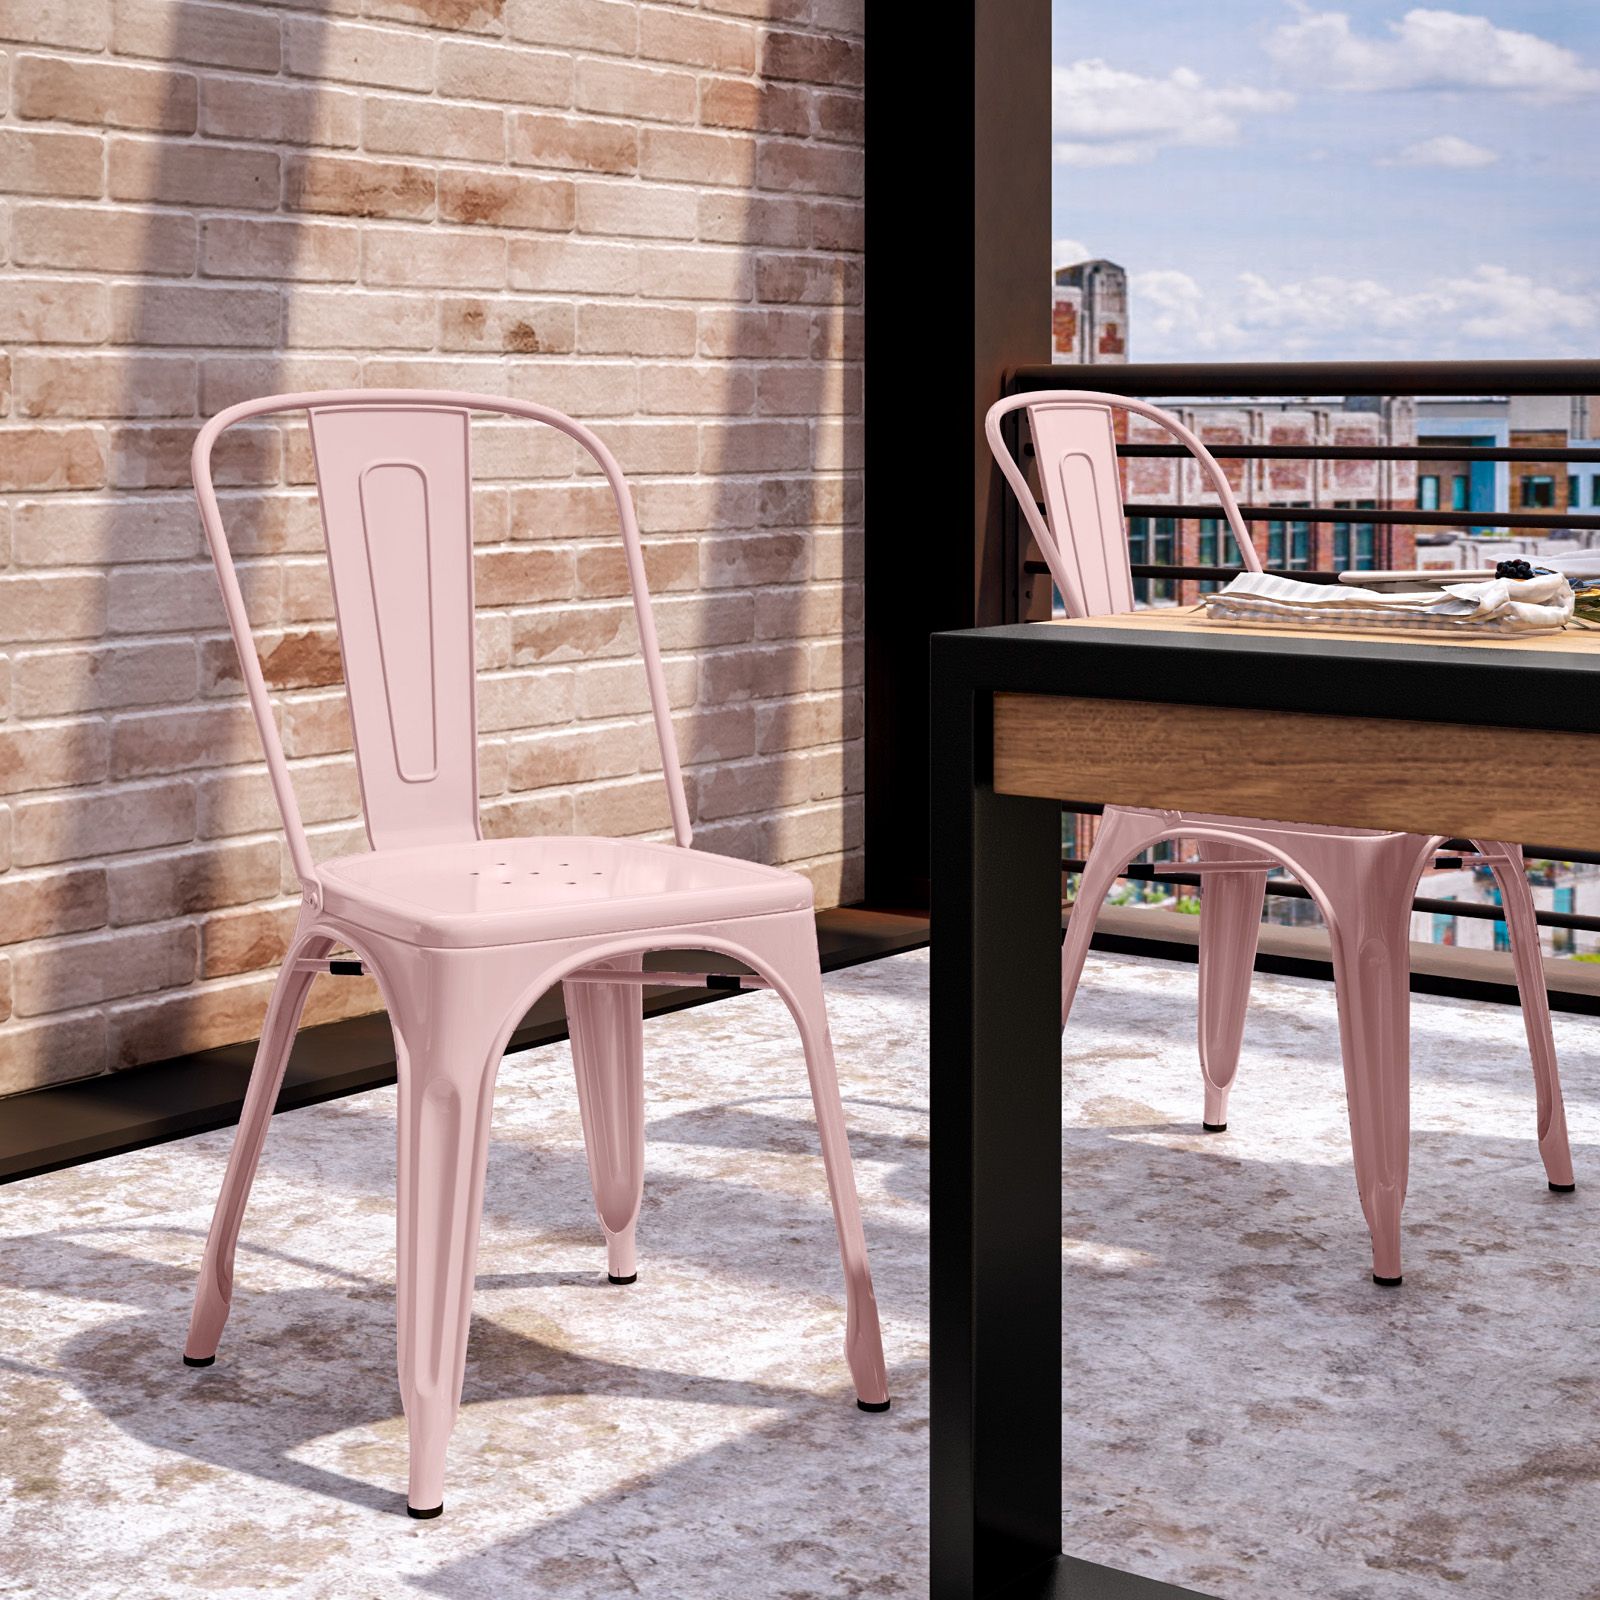 Sedia da giardino stile industrial in metallo rosa - Farley